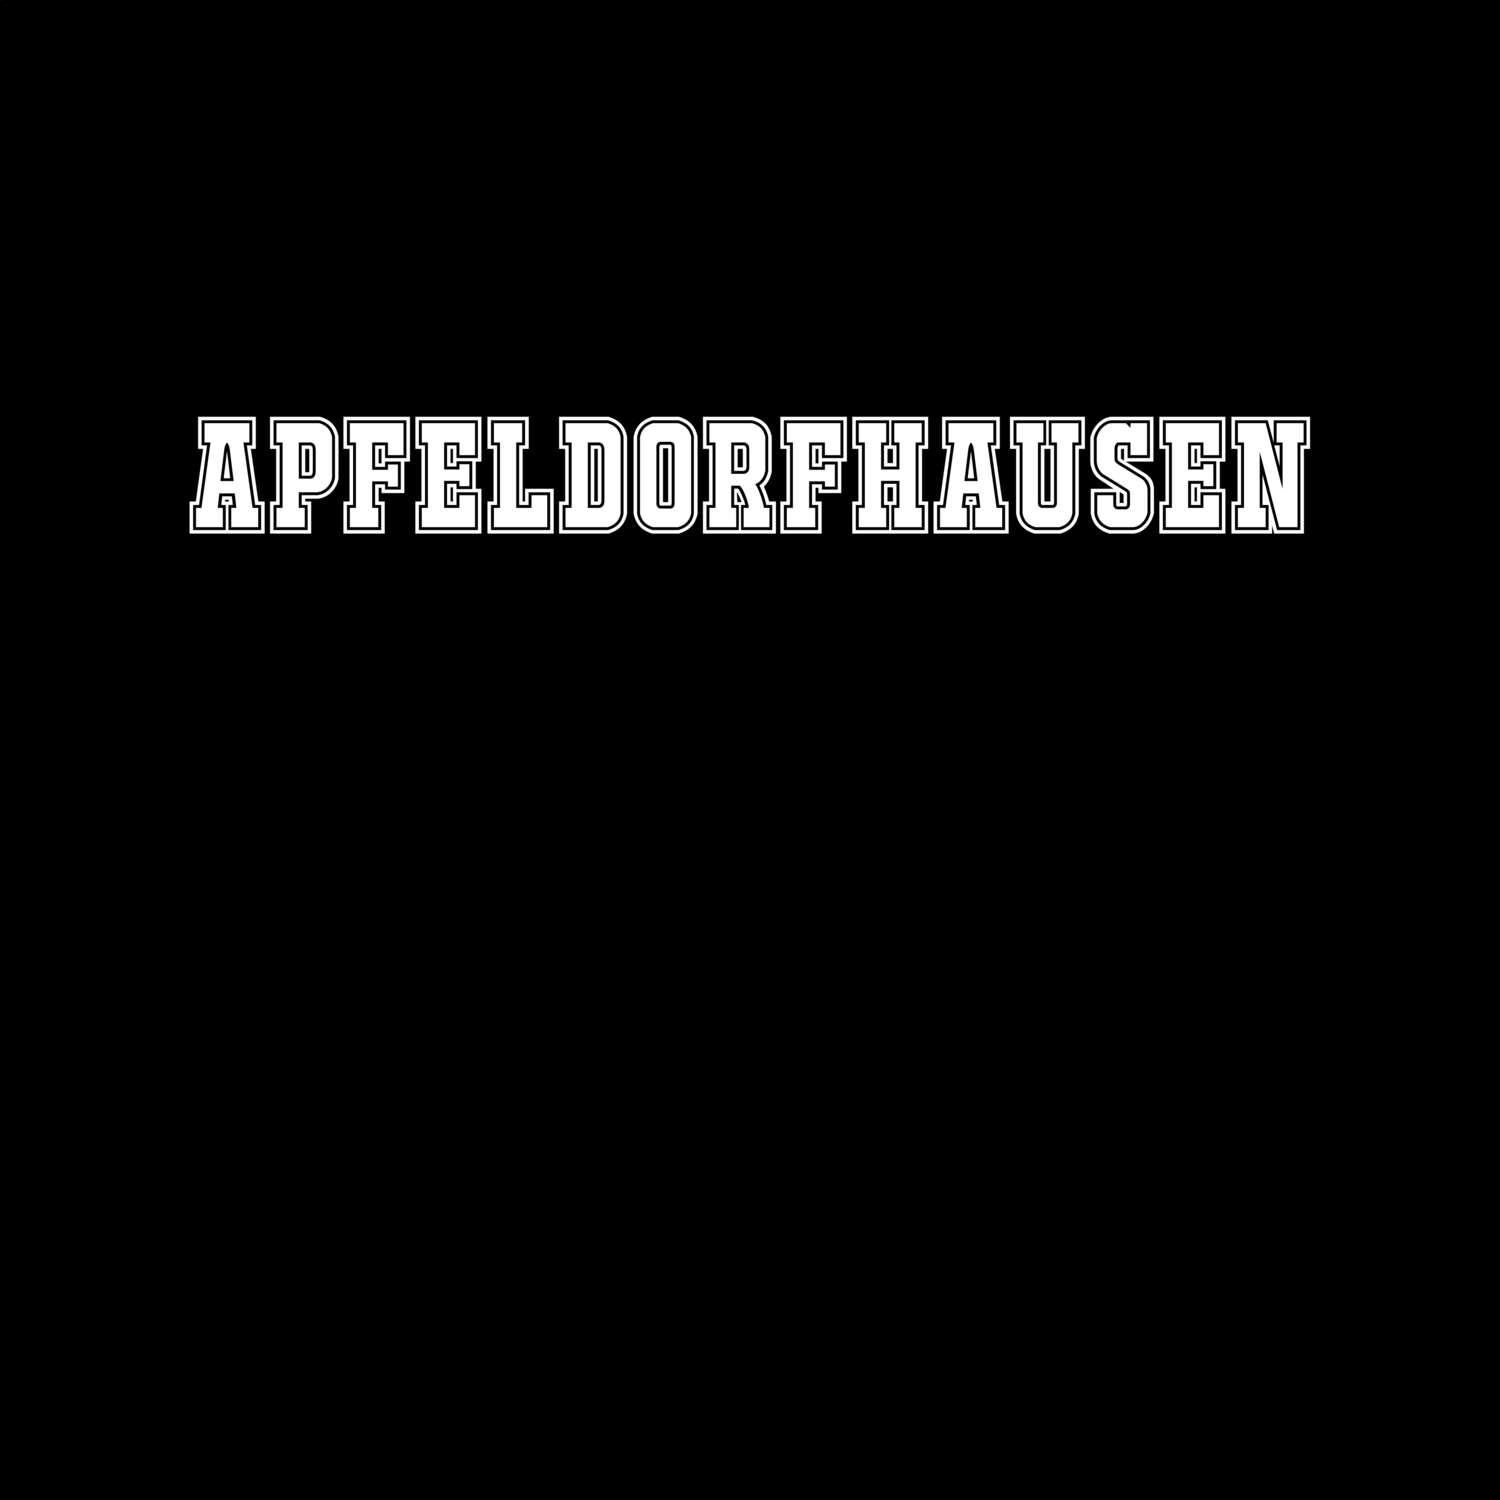 Apfeldorfhausen T-Shirt »Classic«